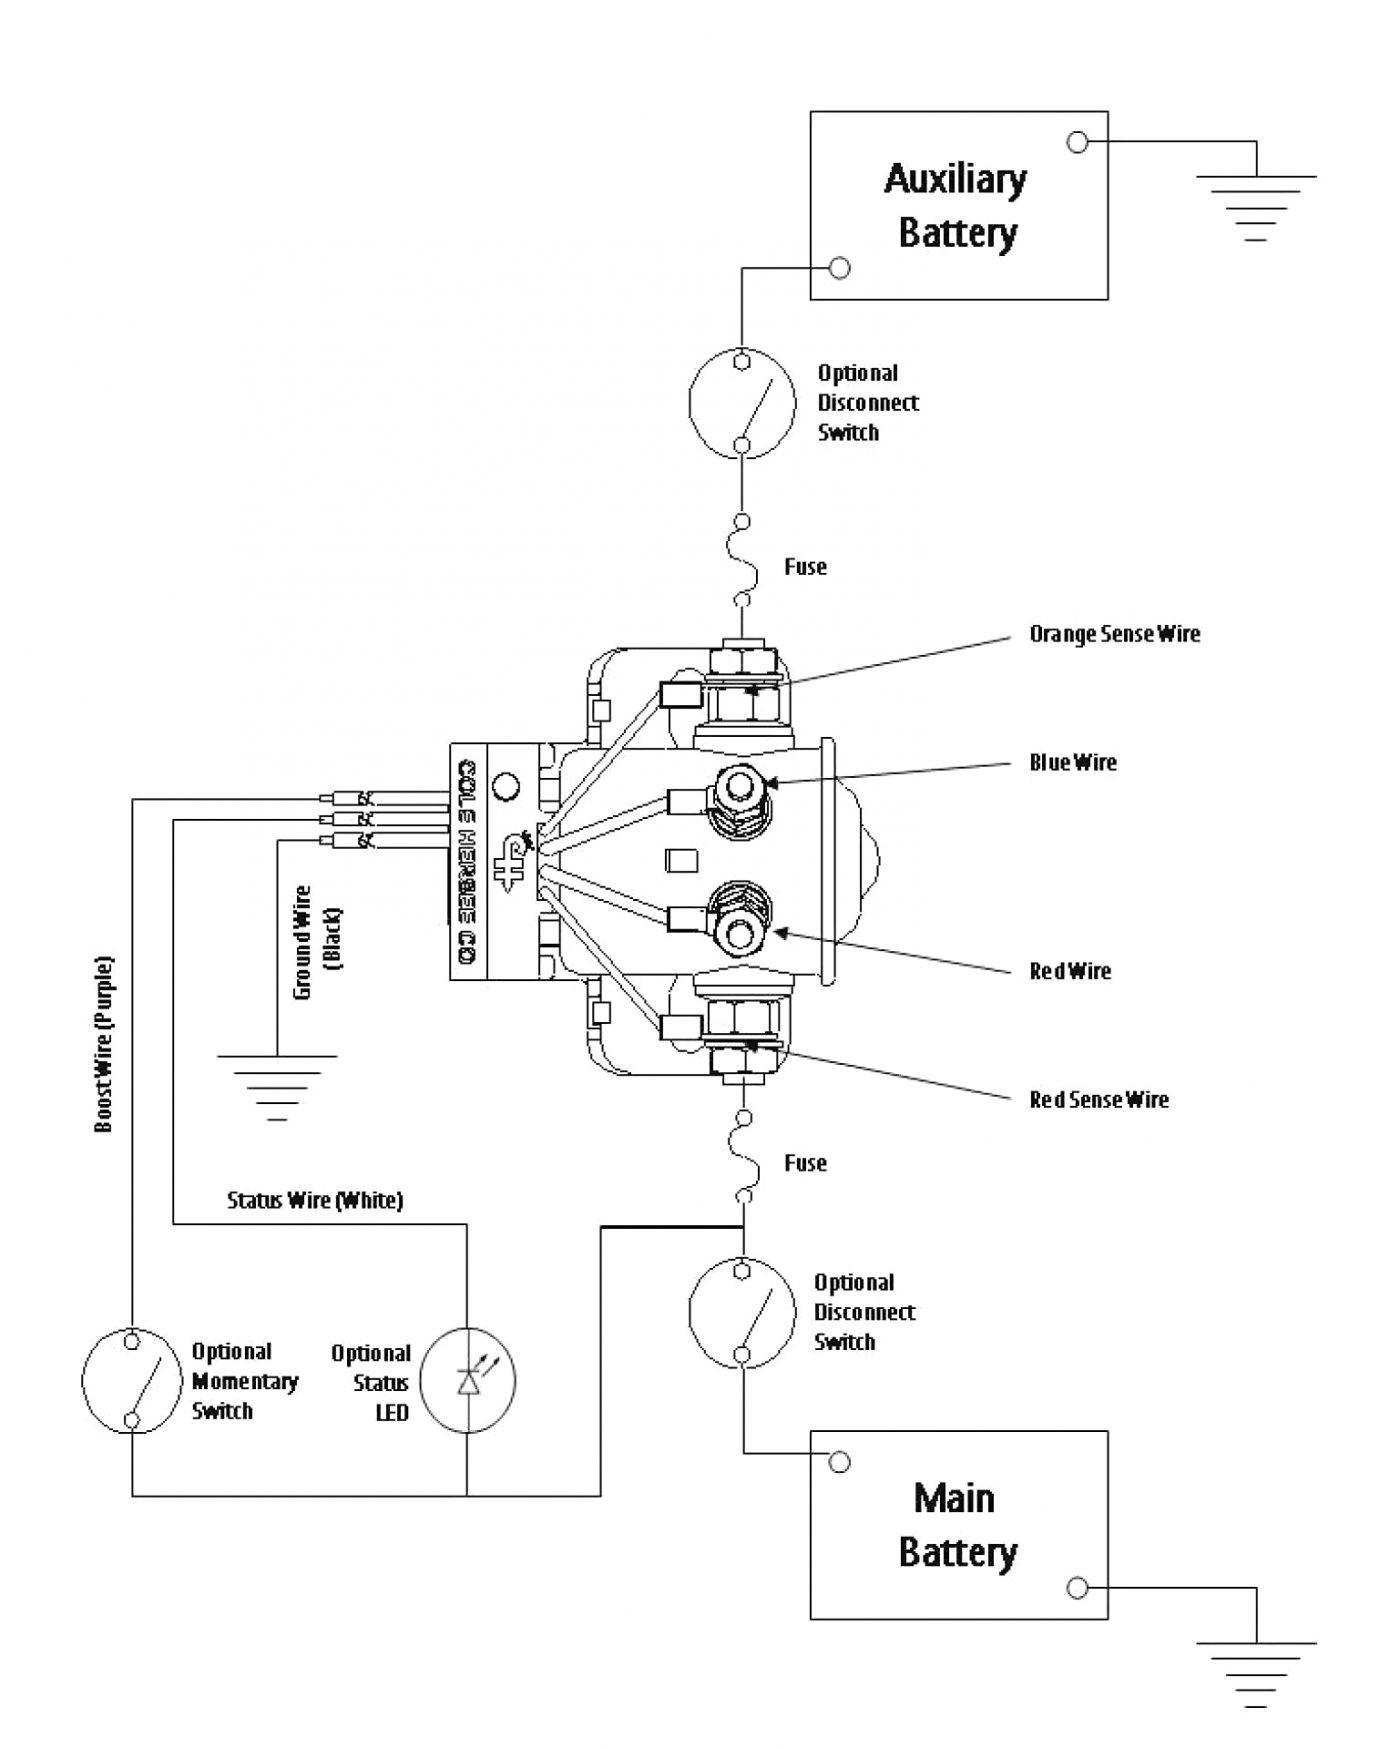 Baldor Wiring Diagram Electric Motor Valid Wiring Diagram For Mercury Vapor Light New Baldor Servo Motor Wiring